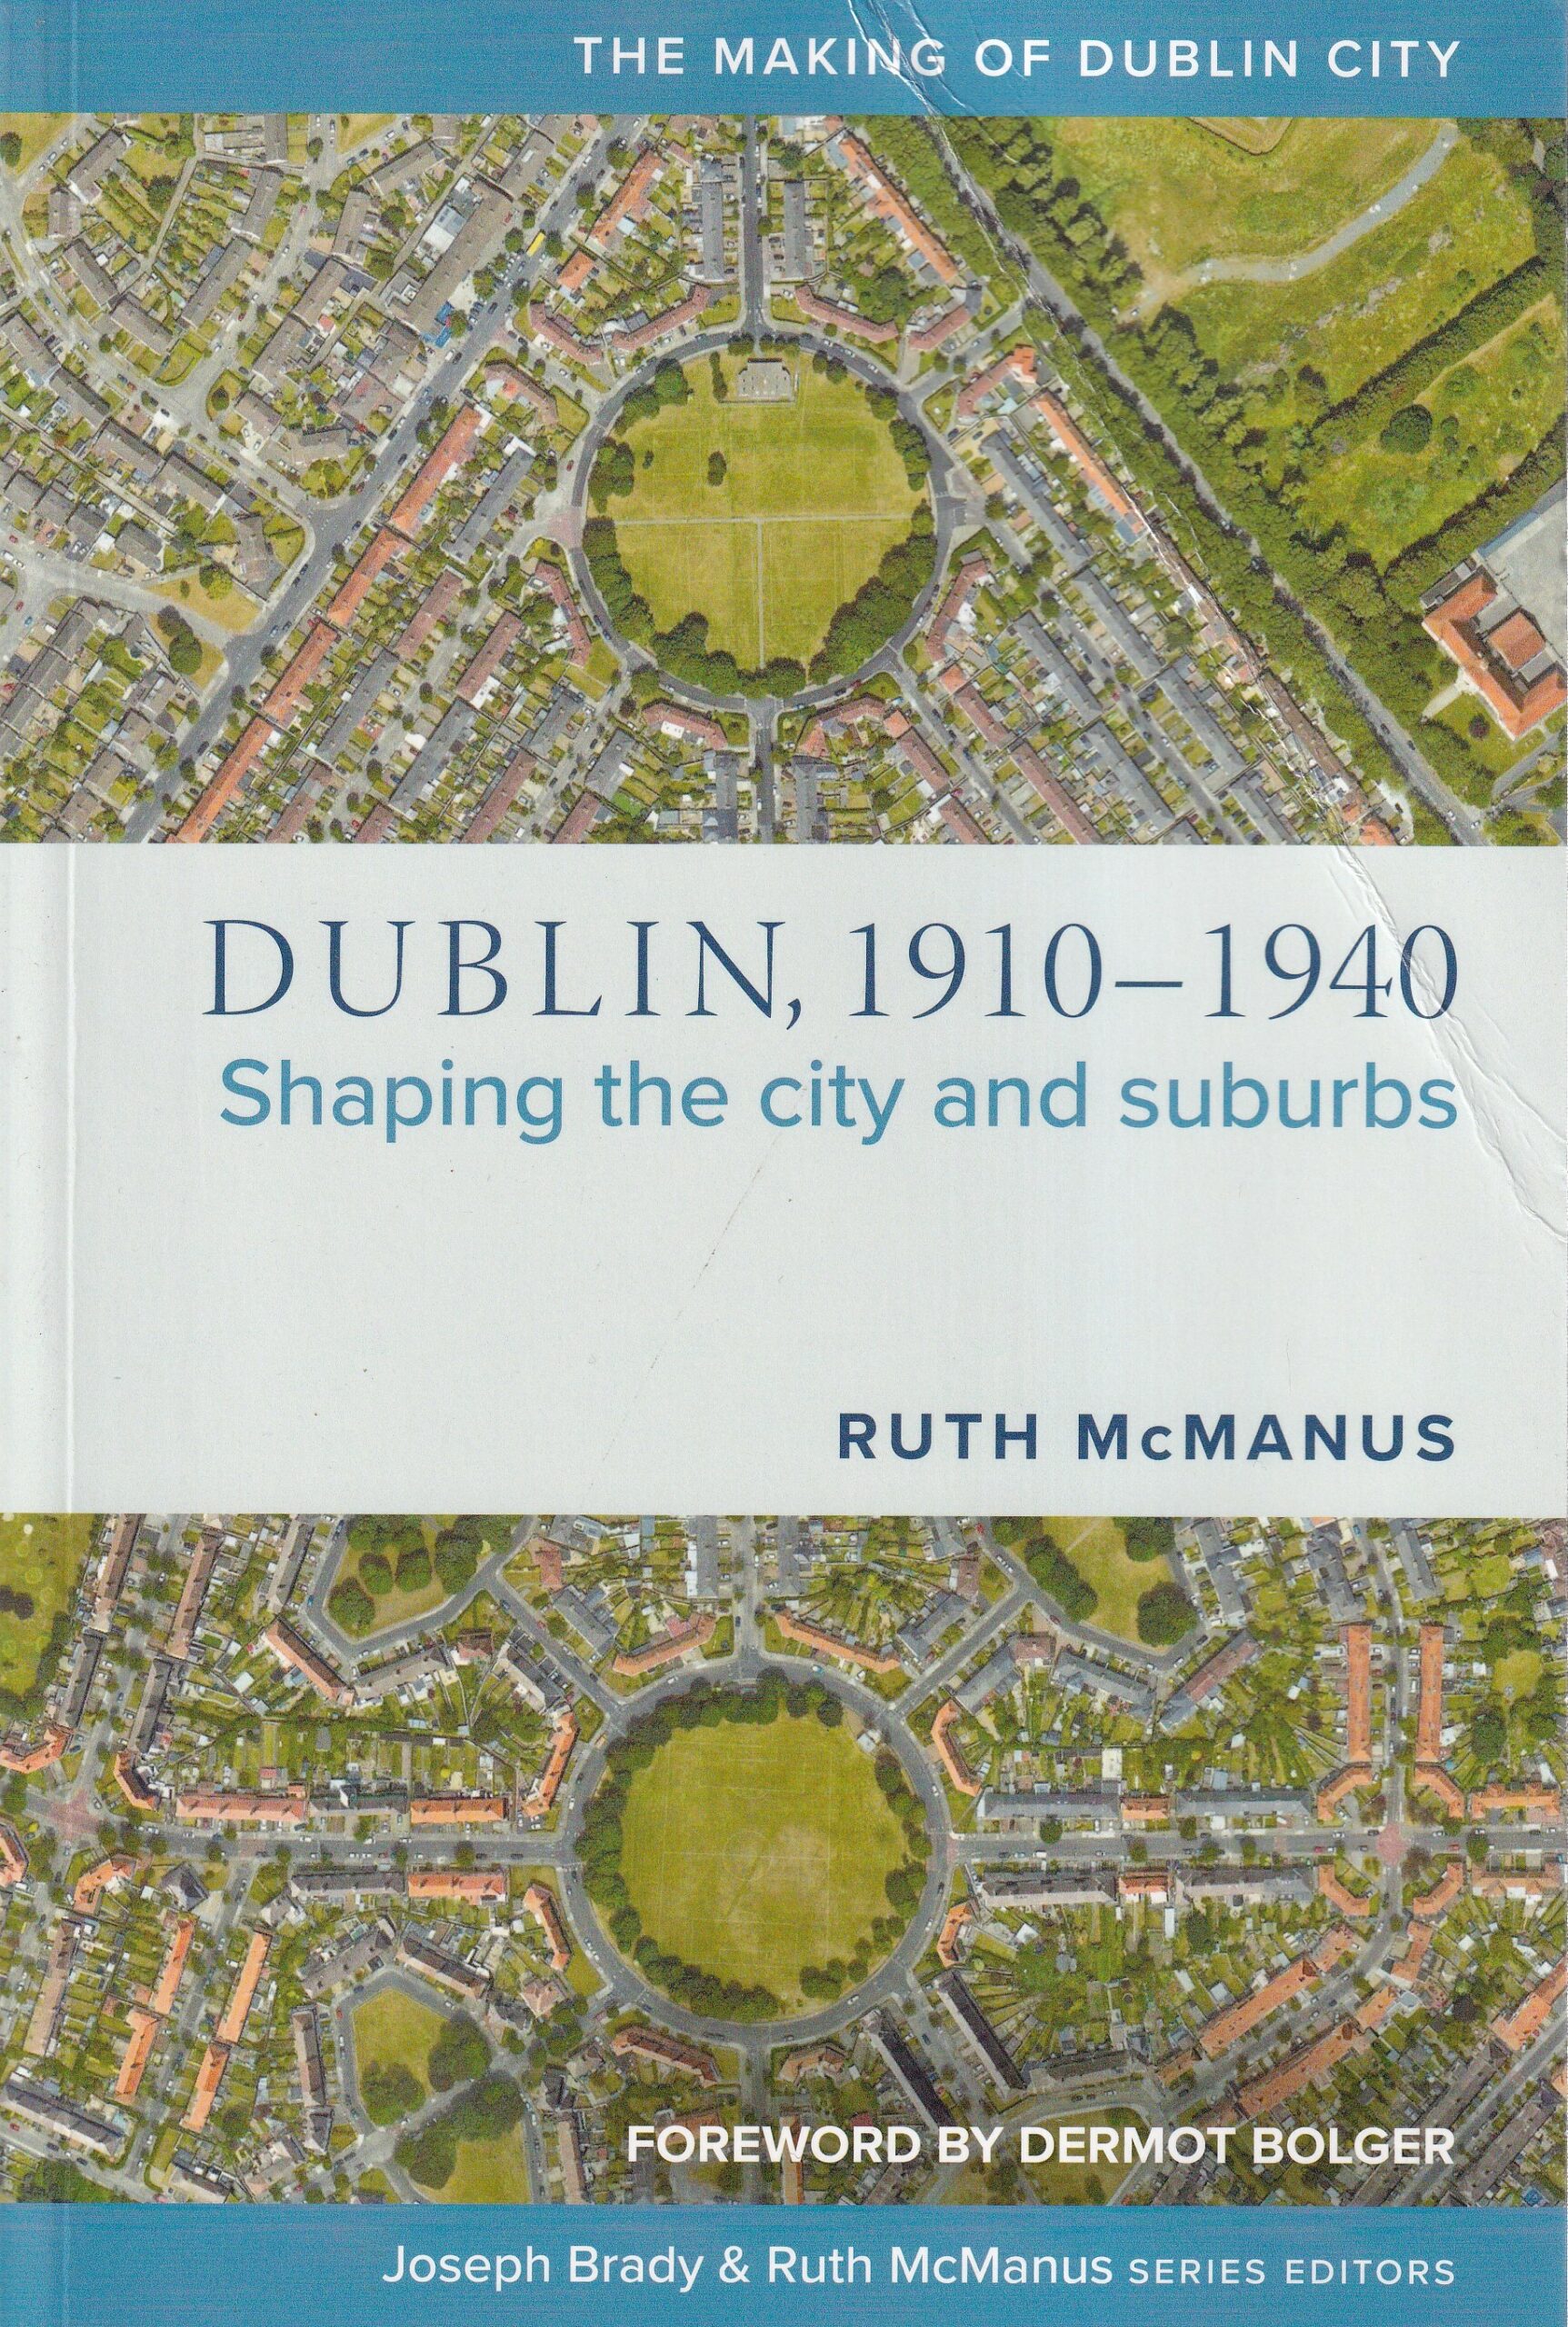 Dublin, 1910-1940: Shaping the city and suburbs | Ruth McManus | Charlie Byrne's